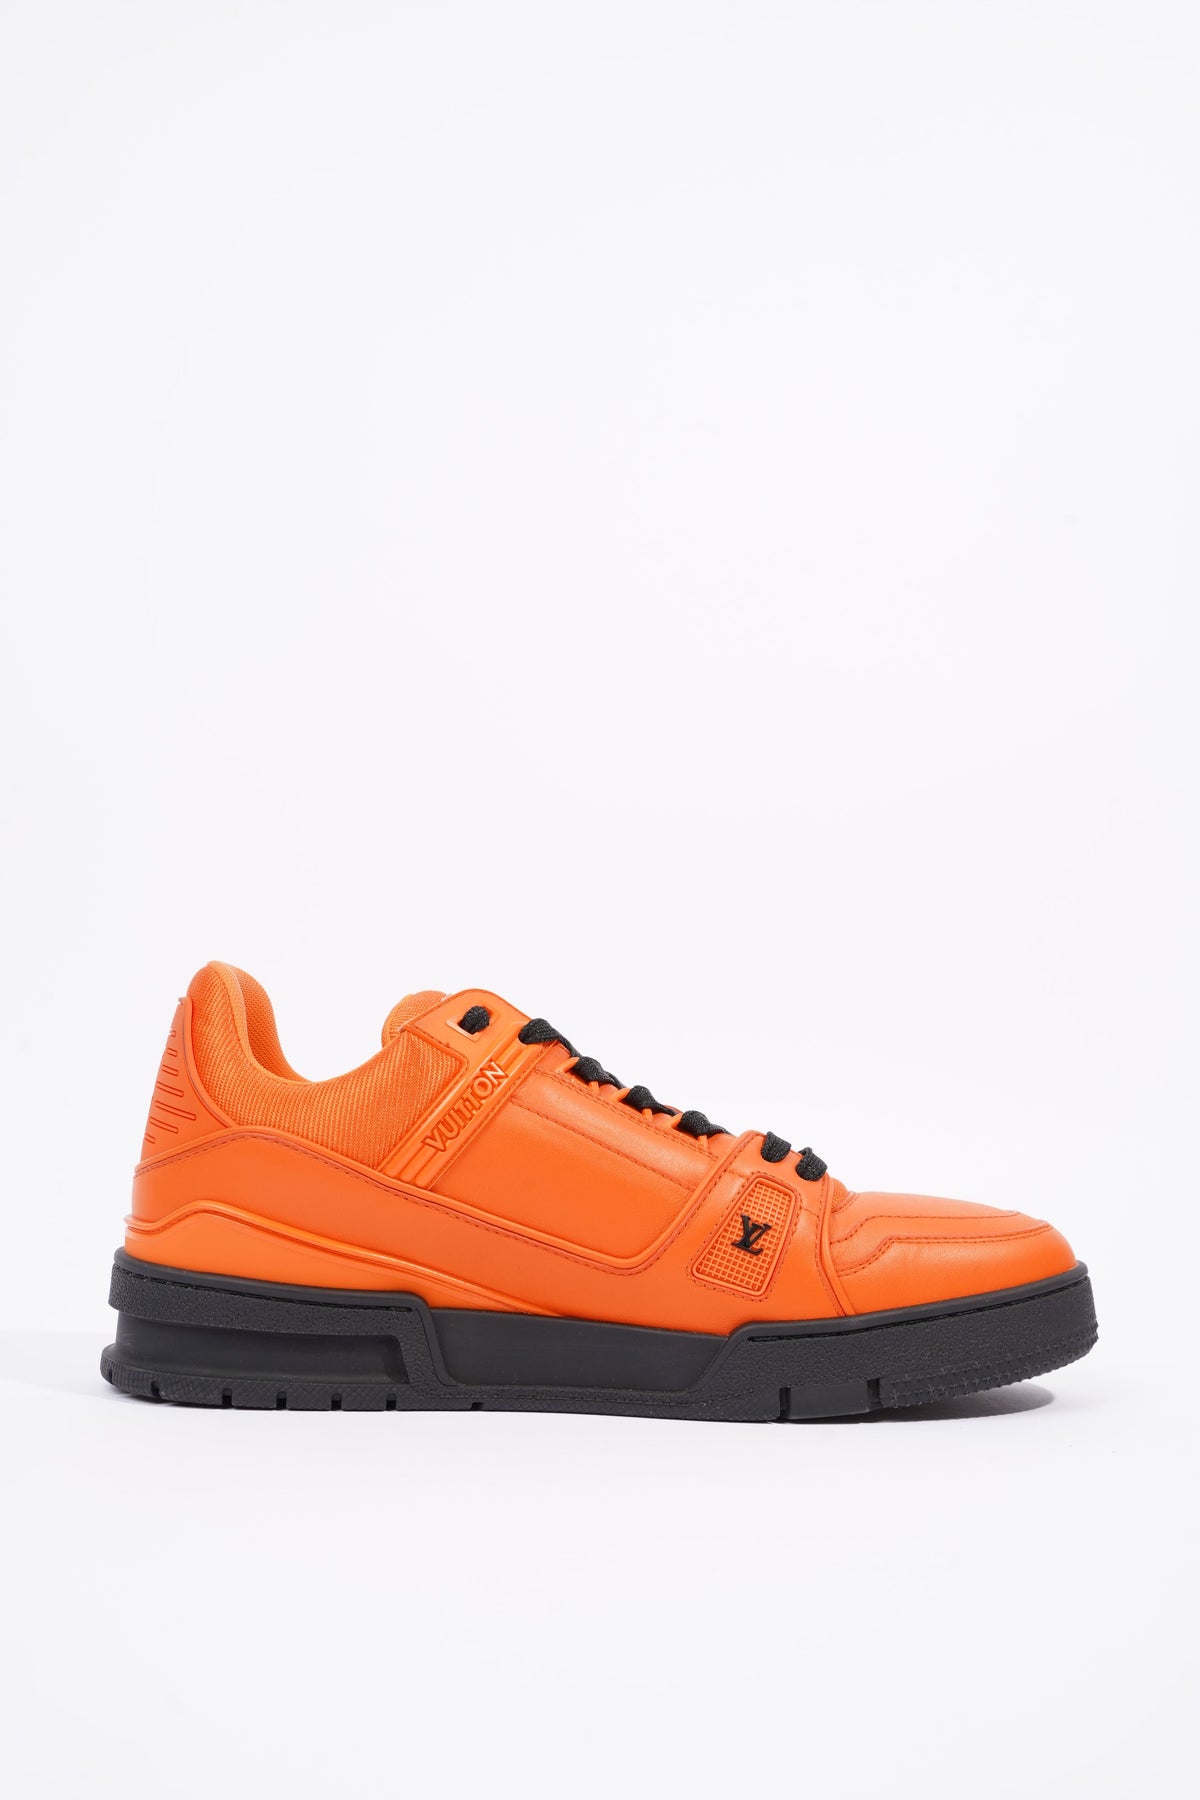 Louis Vuitton Mens Virgil Abloh Sneaker Orange / Black EU 41 / UK 7